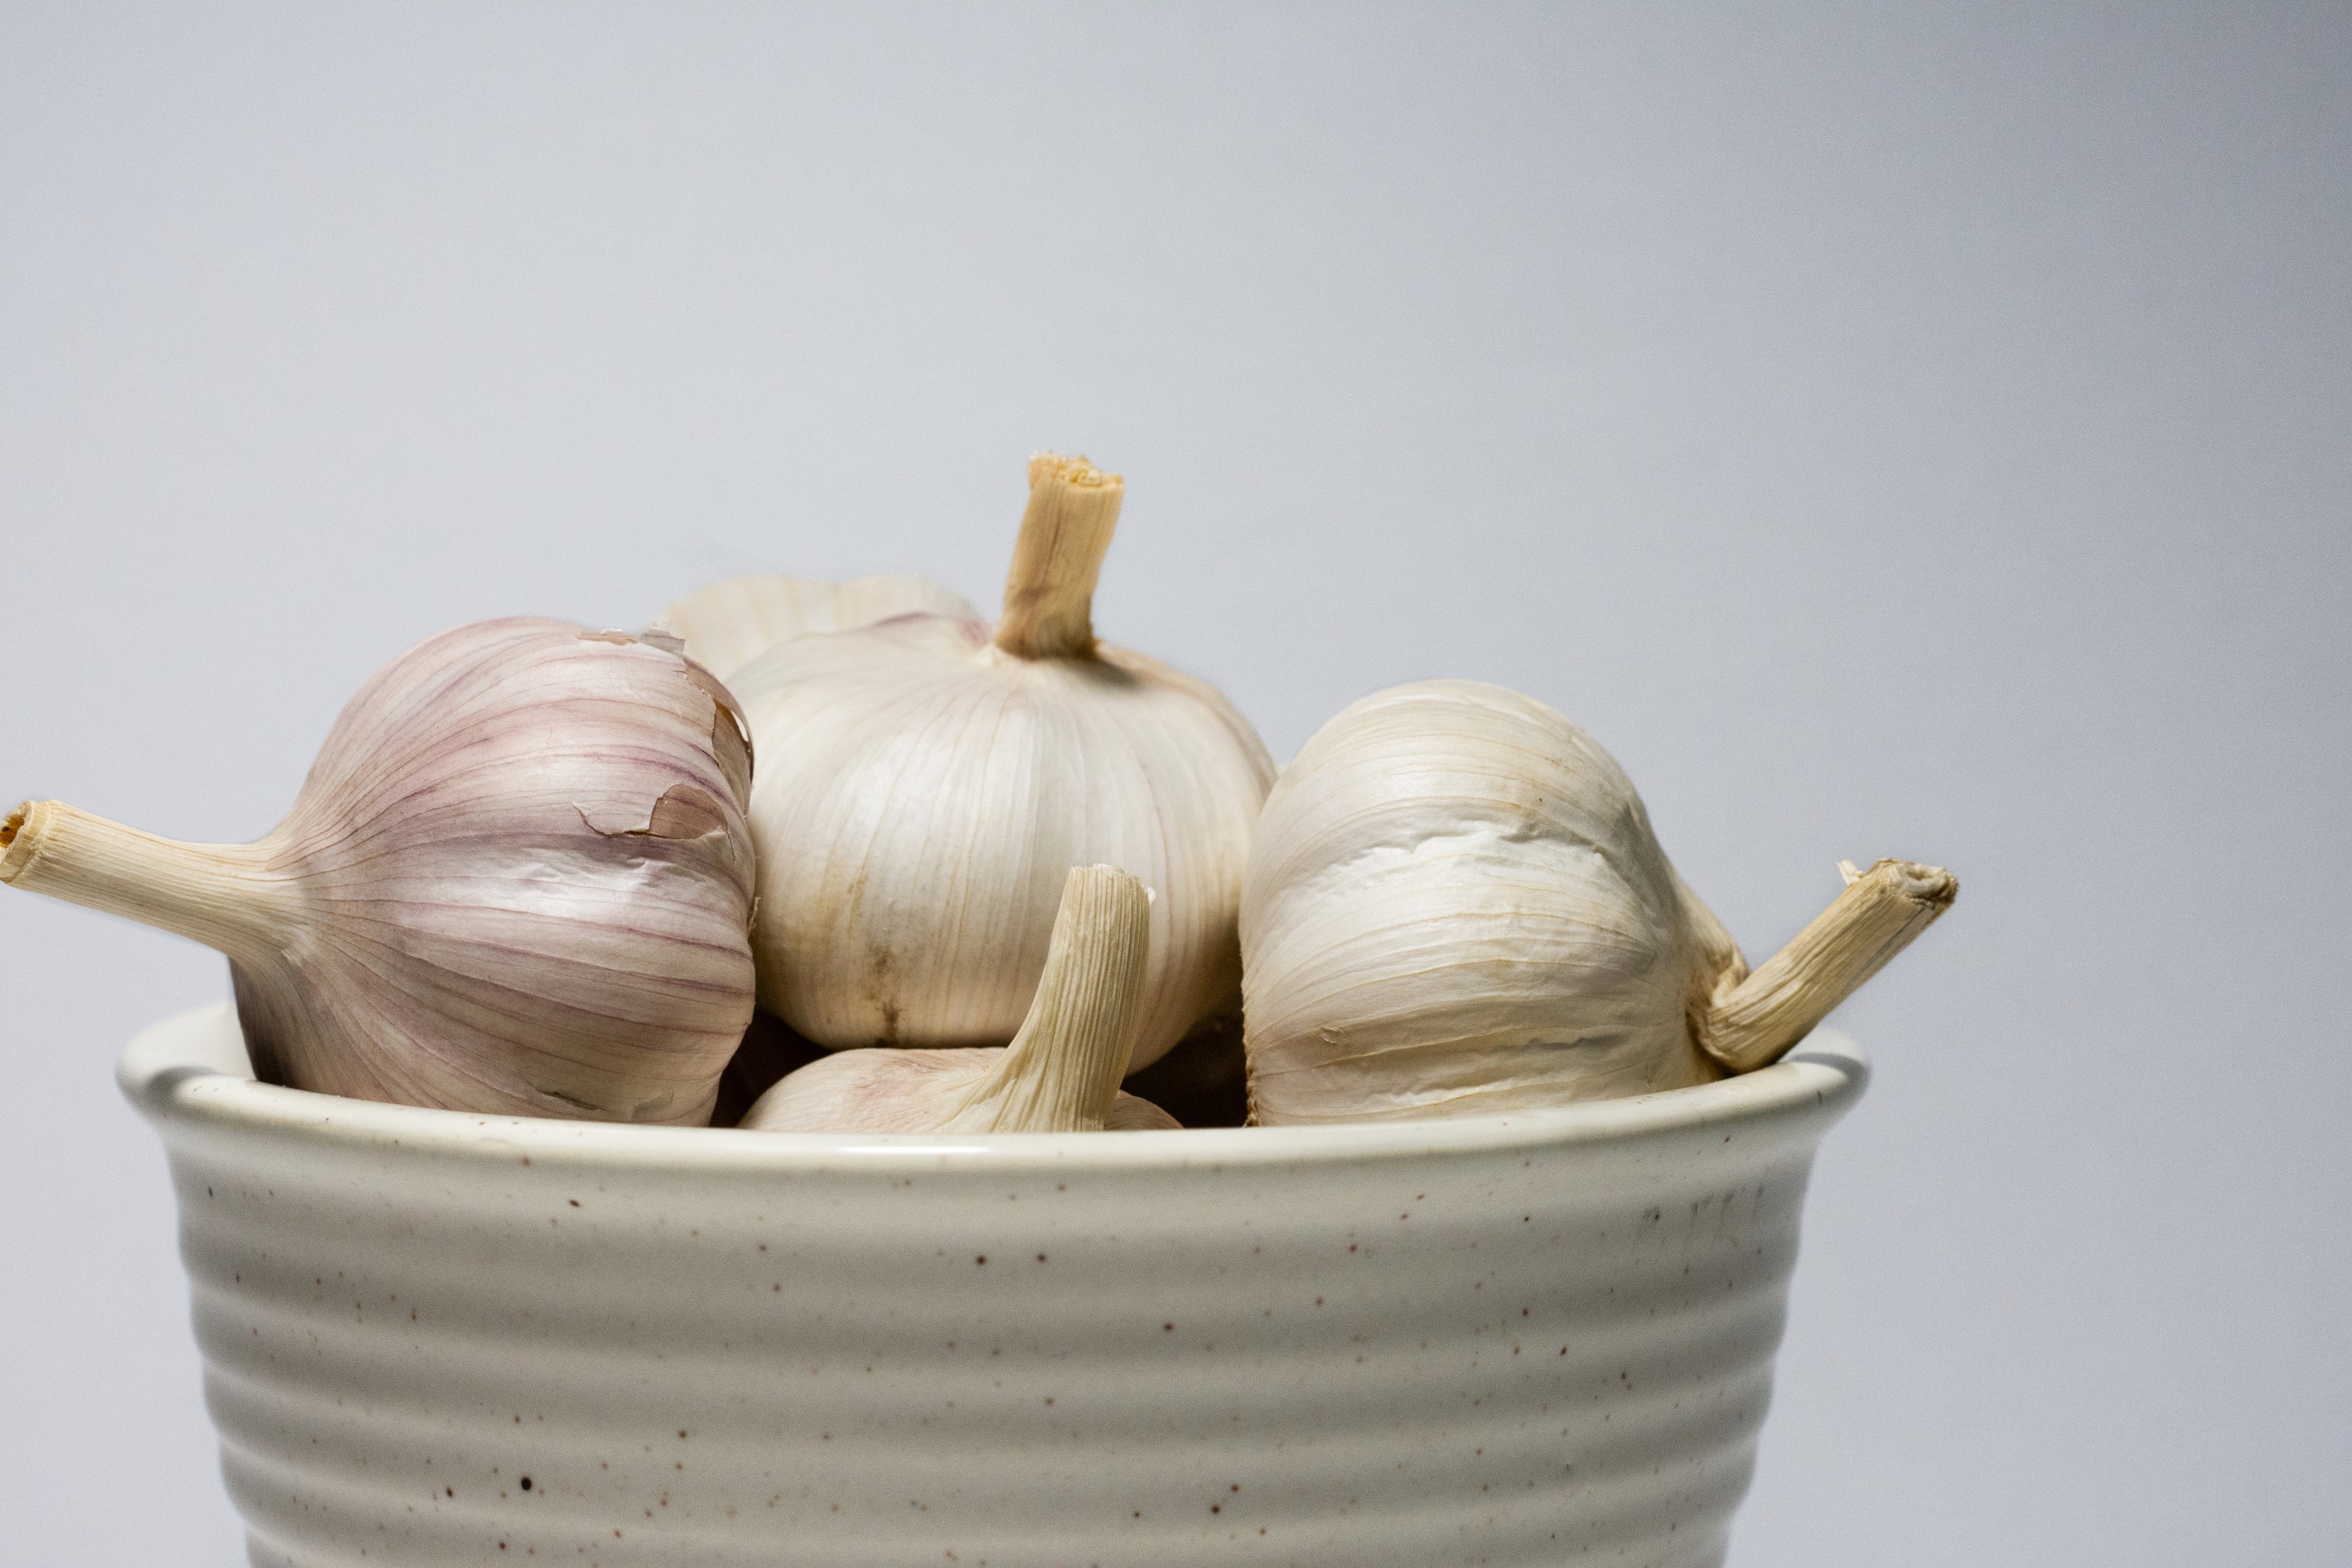 Load video: Peeling Garlic